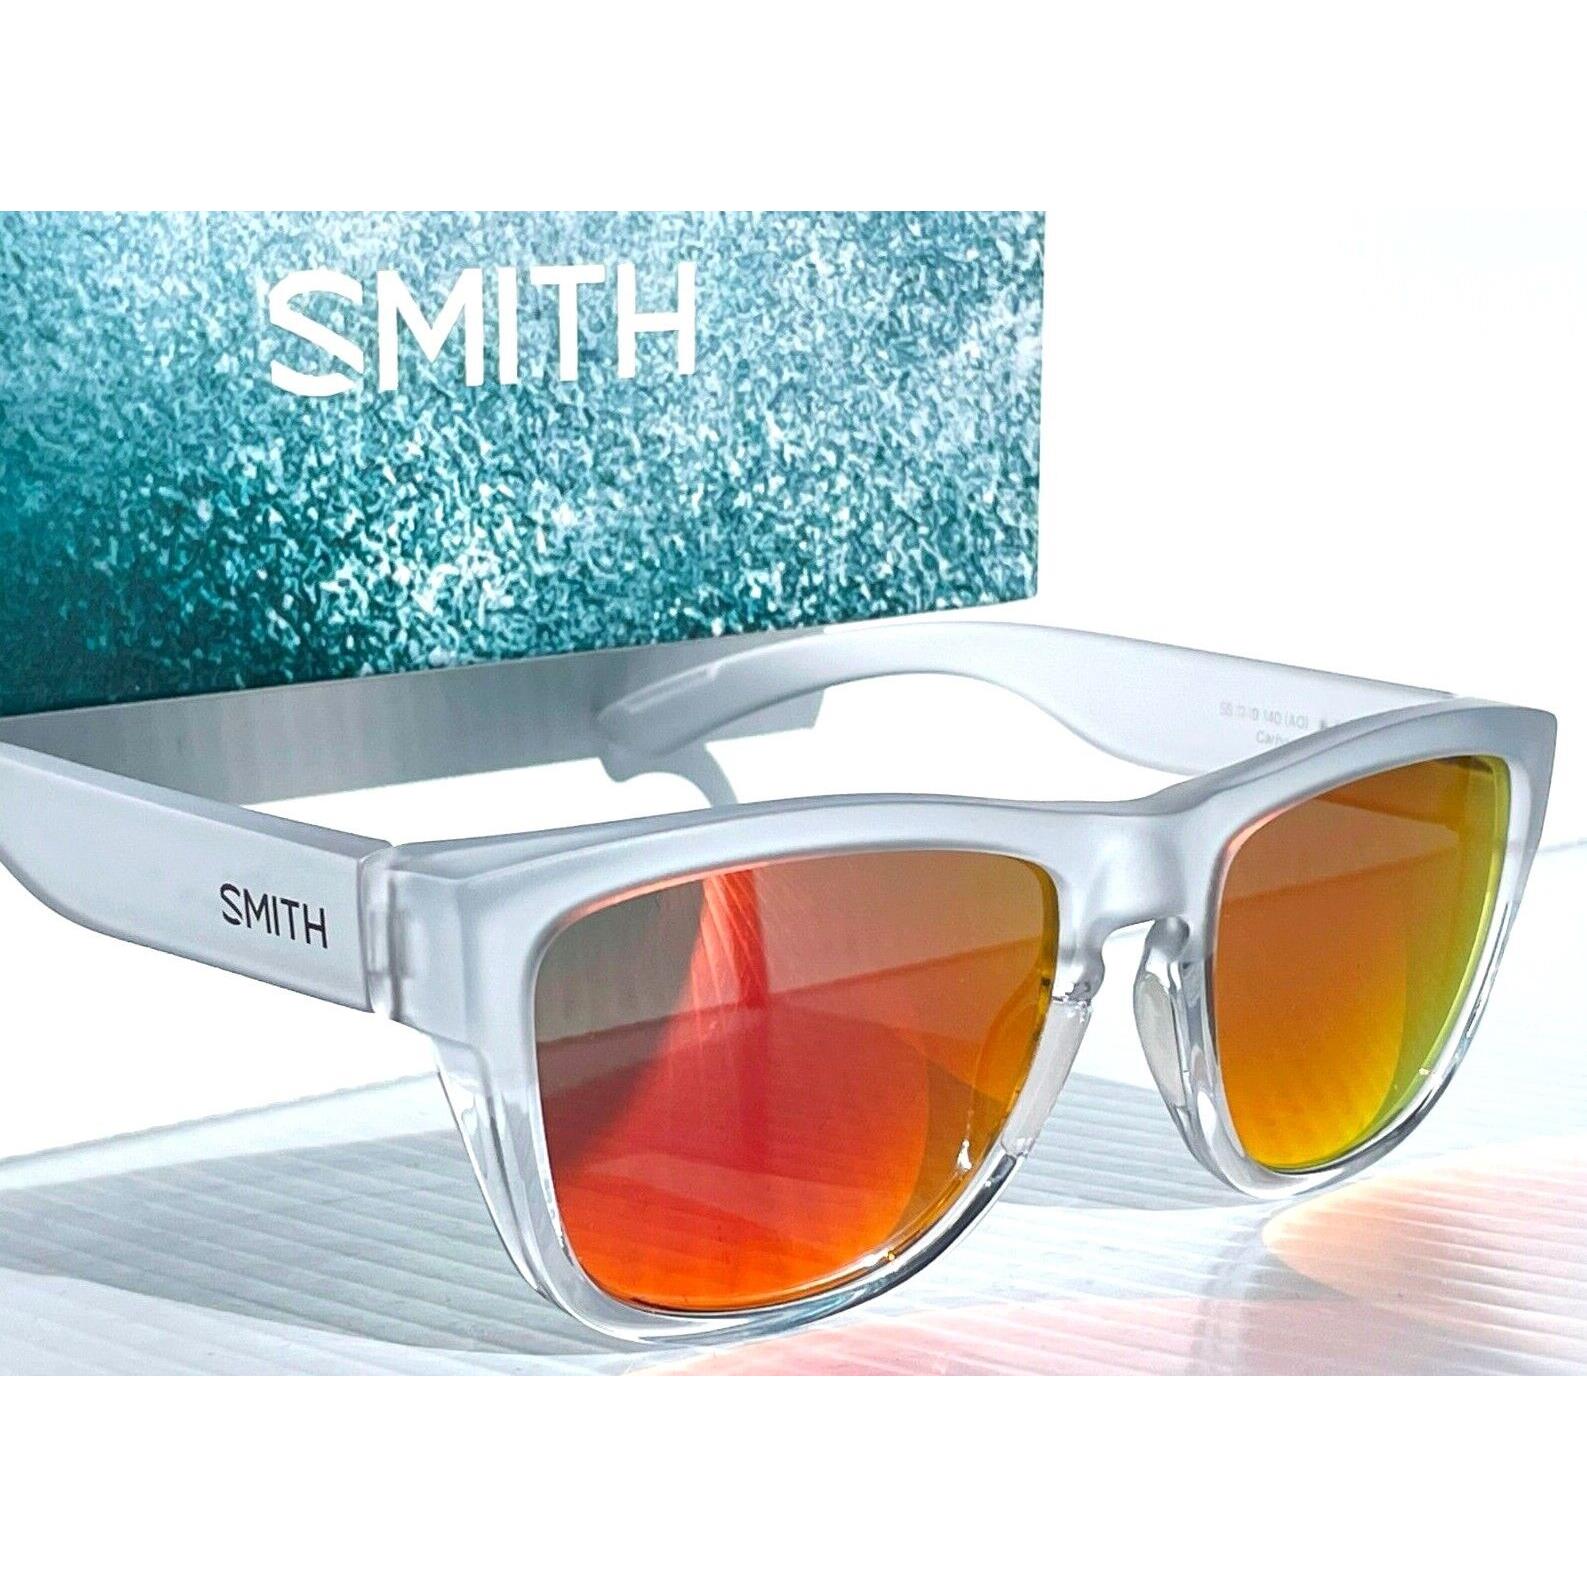 Smith Optics sunglasses Optic Clark - Matte Clear Frame, Red Lens 9